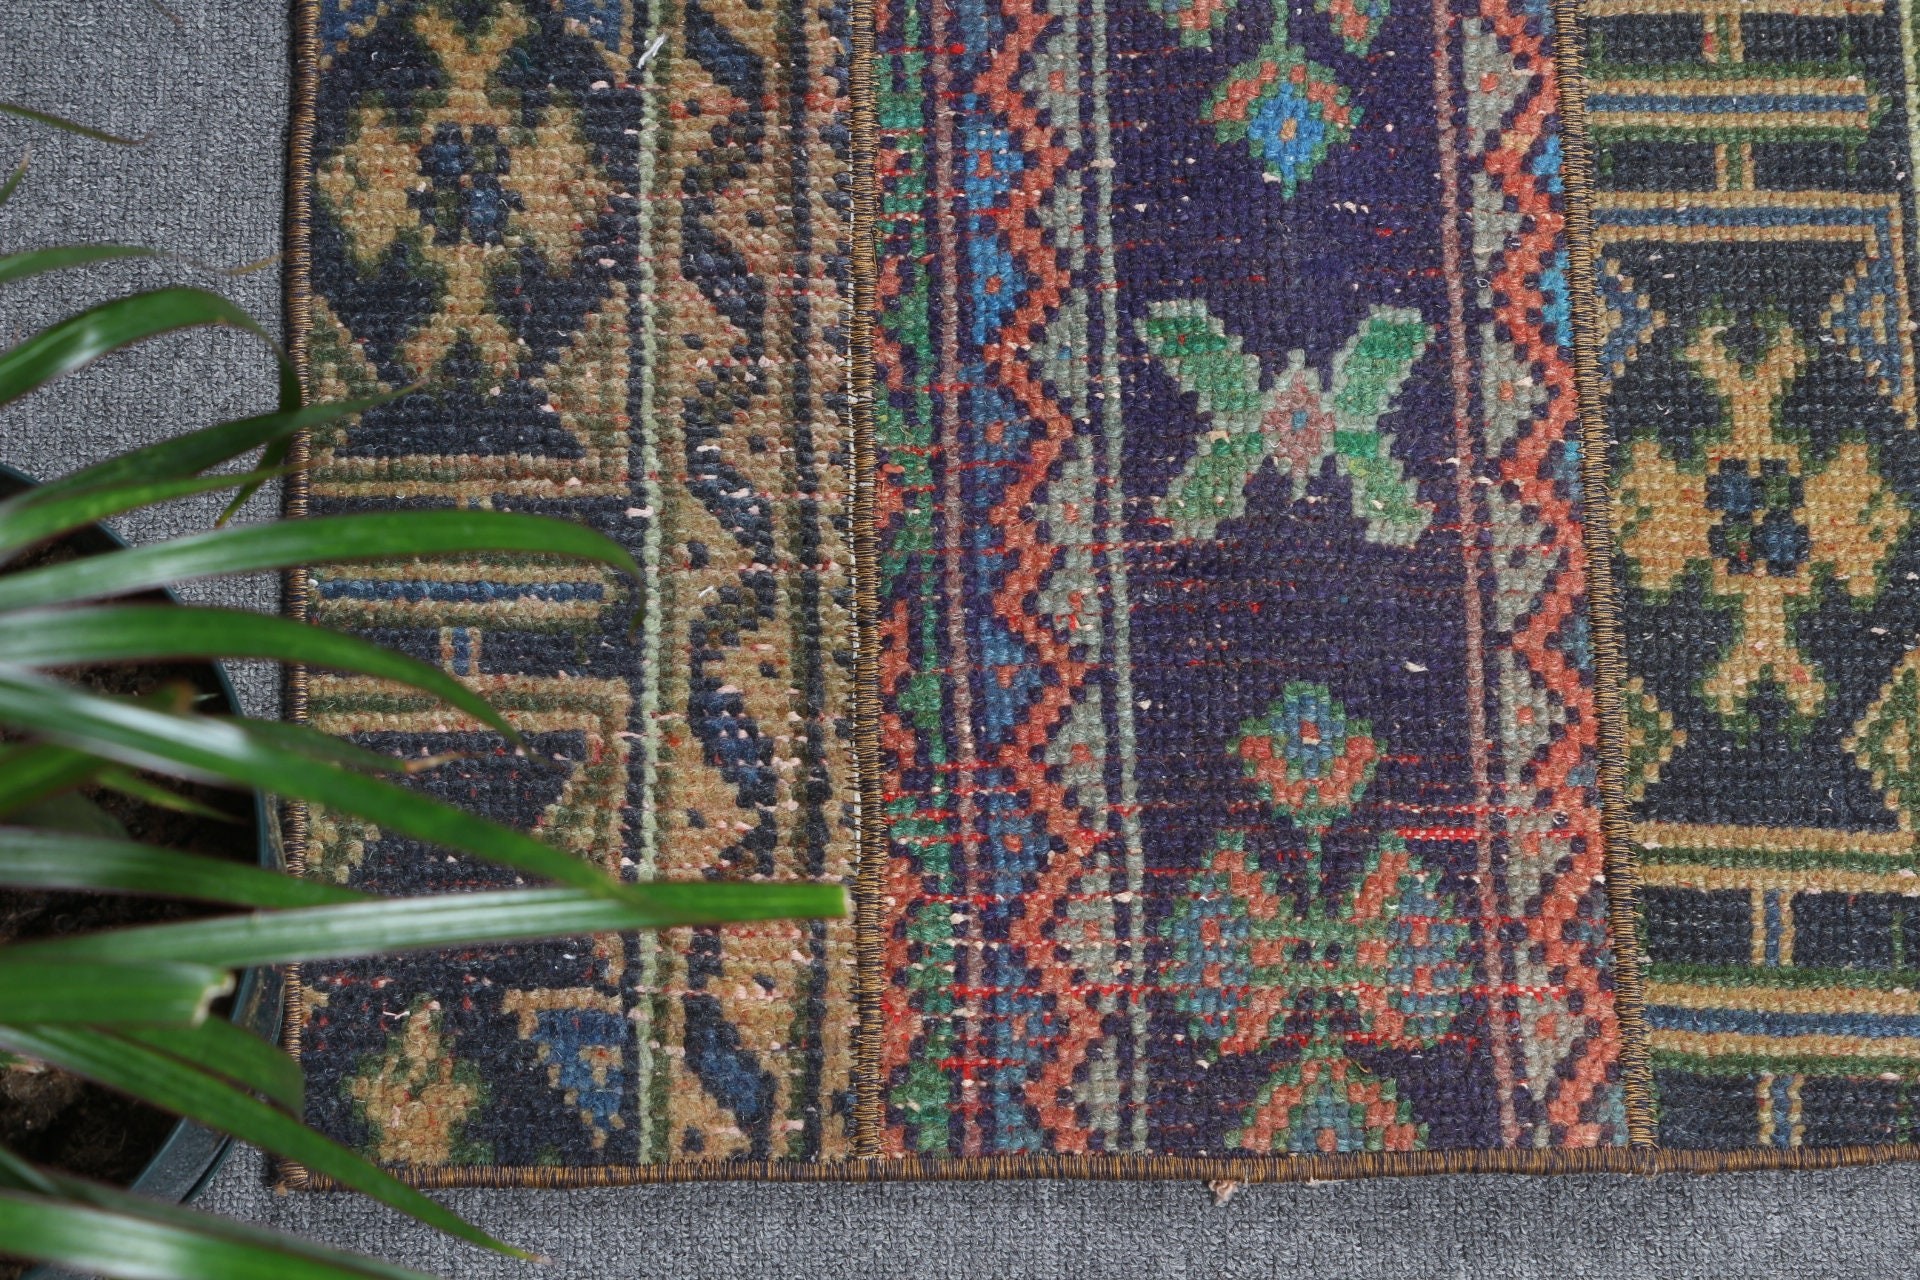 Turkish Rug, Vintage Rugs, Art Rug, Rugs for Car Mat, Nursery Rug, Blue Cool Rug, 2x4.8 ft Small Rug, Entry Rugs, Home Decor Rug, Wool Rug